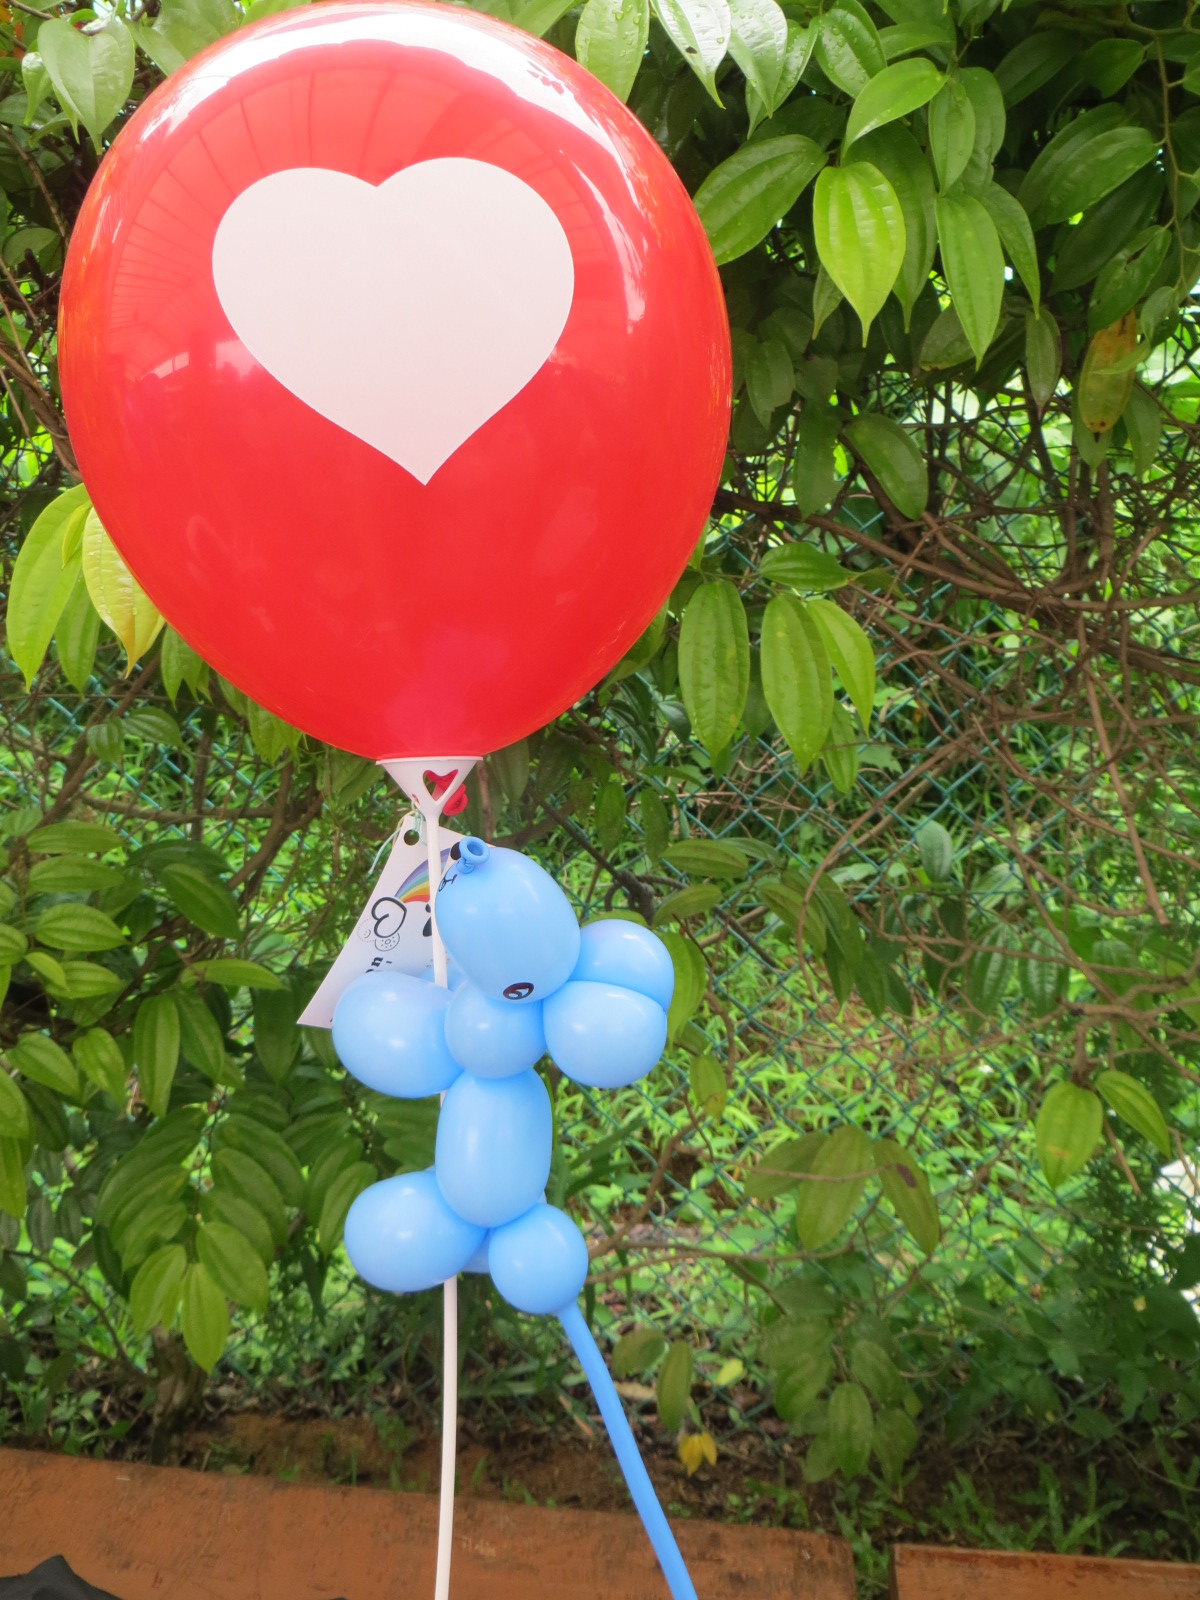 A balloon mouse and a round heart balloon